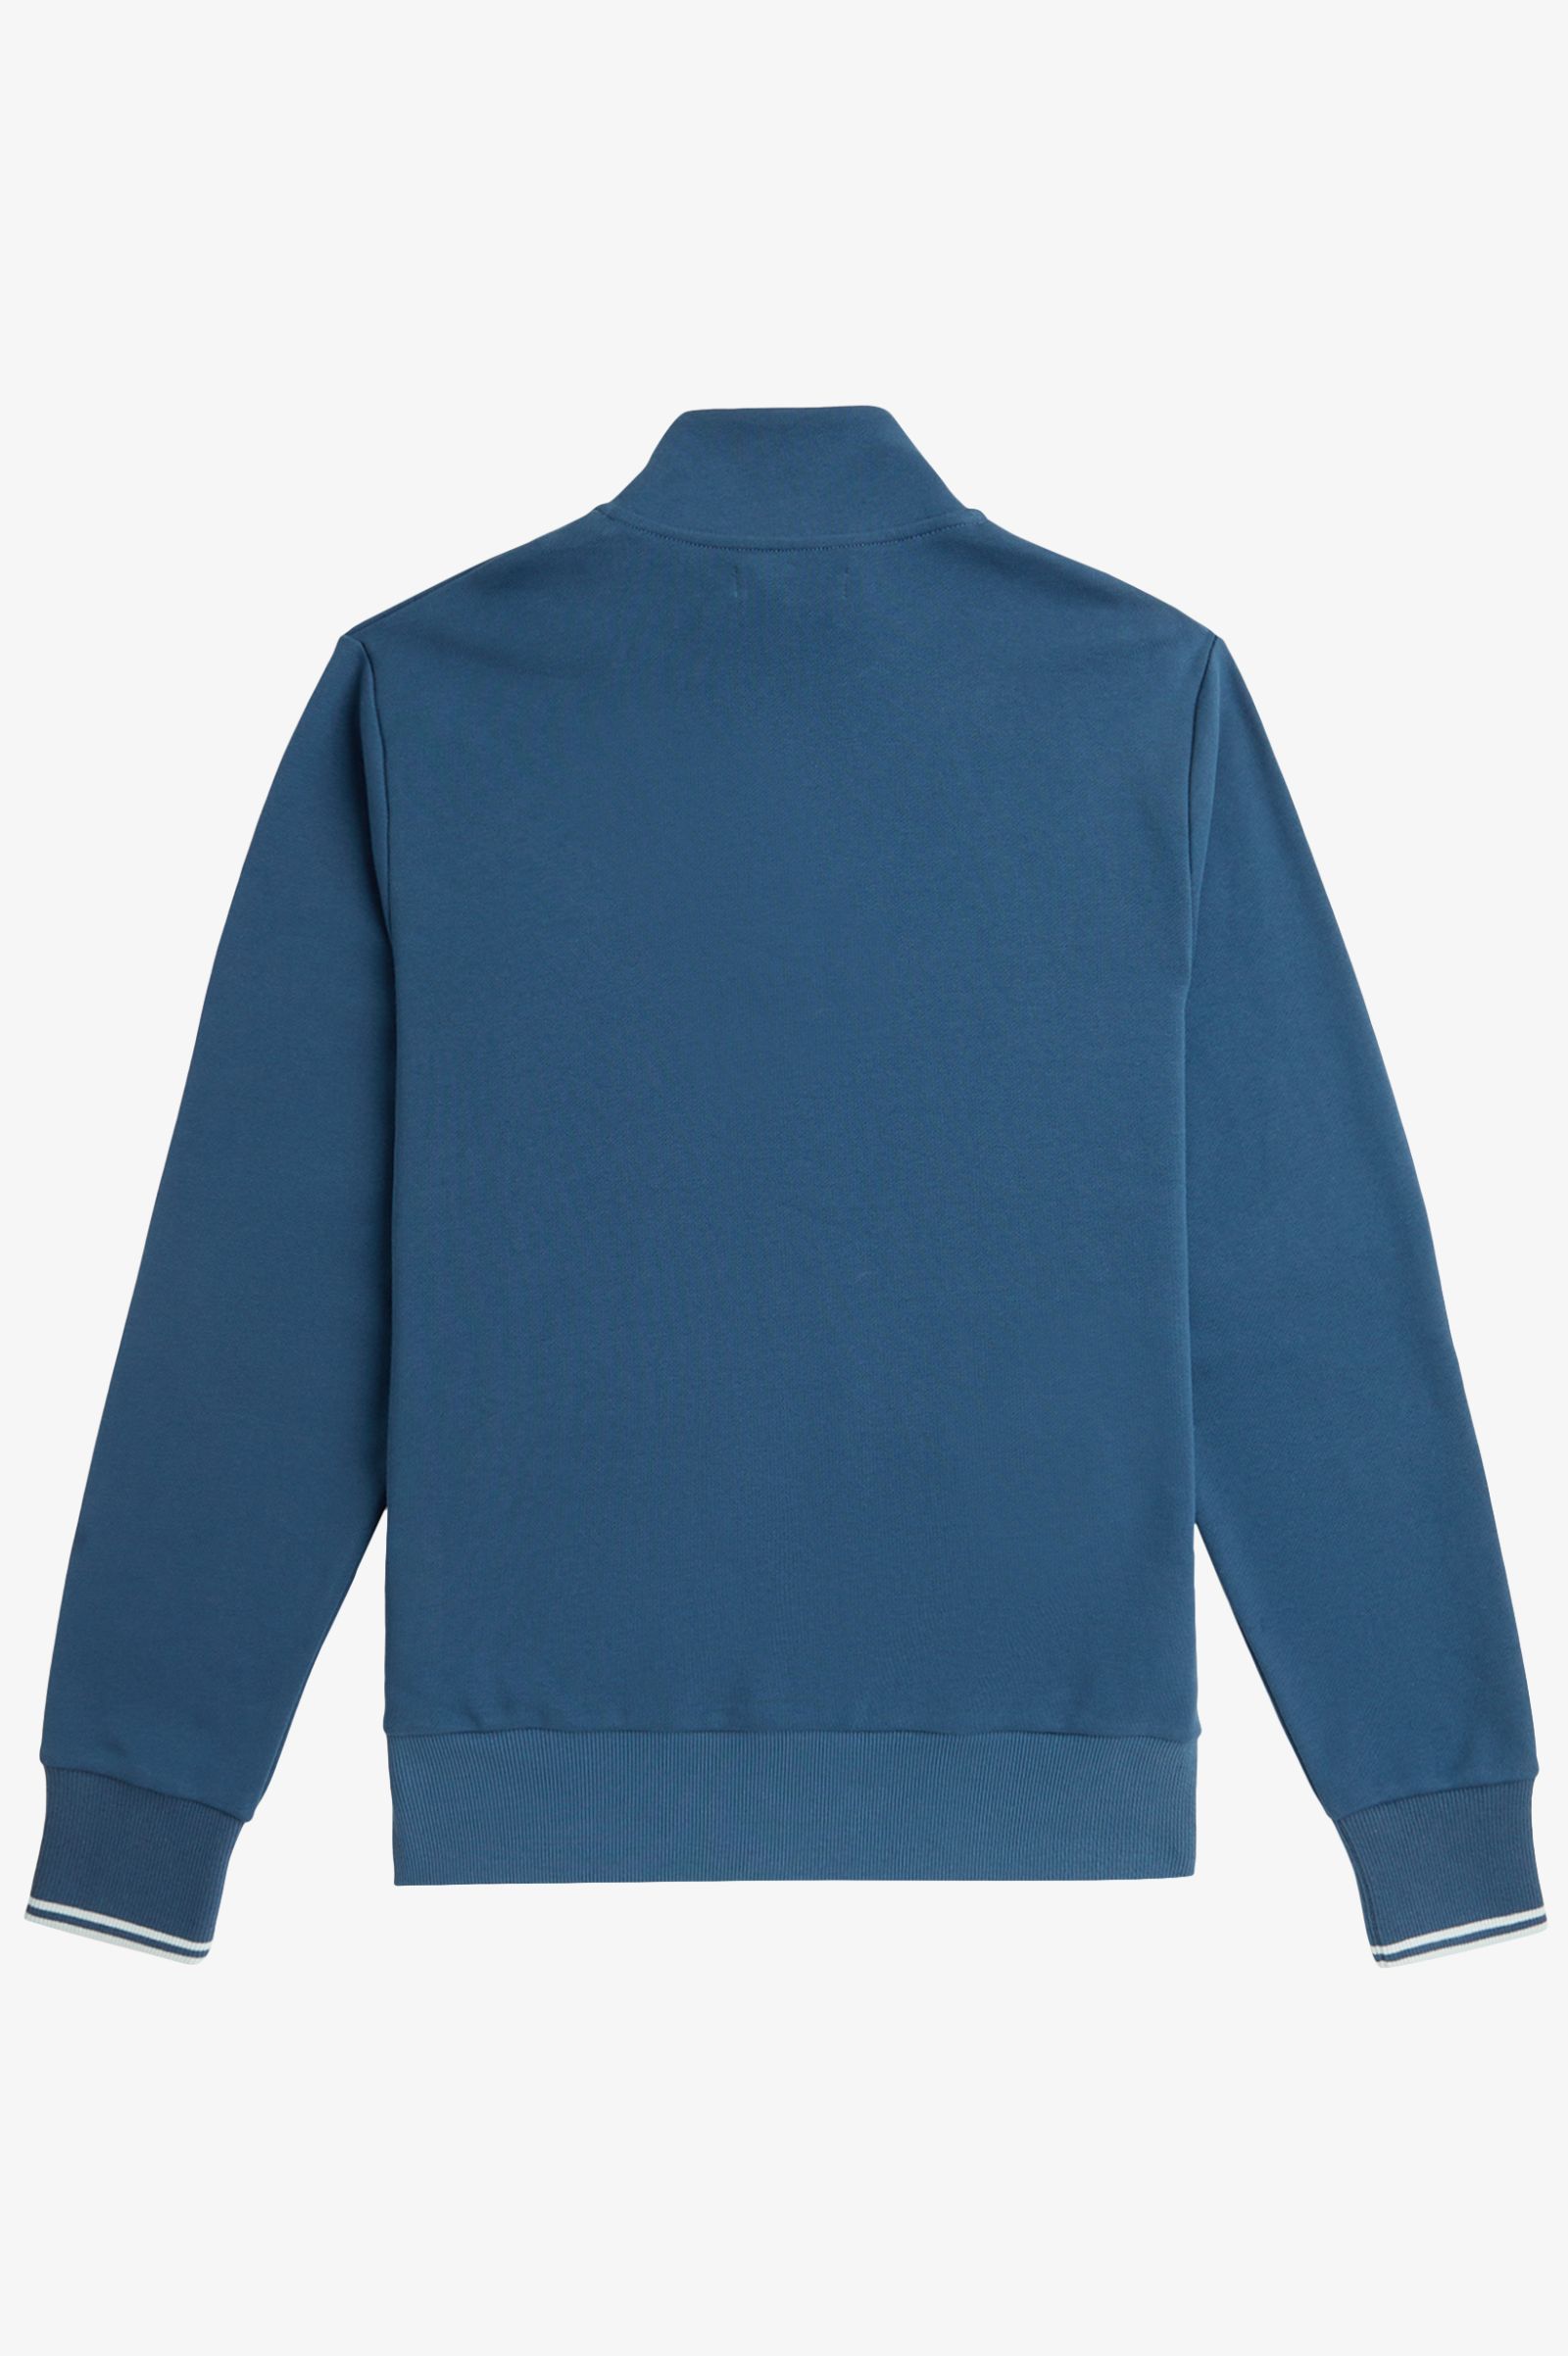 Fred Perry Half Zip Sweatshirt in Midnight Blue / Light Ice